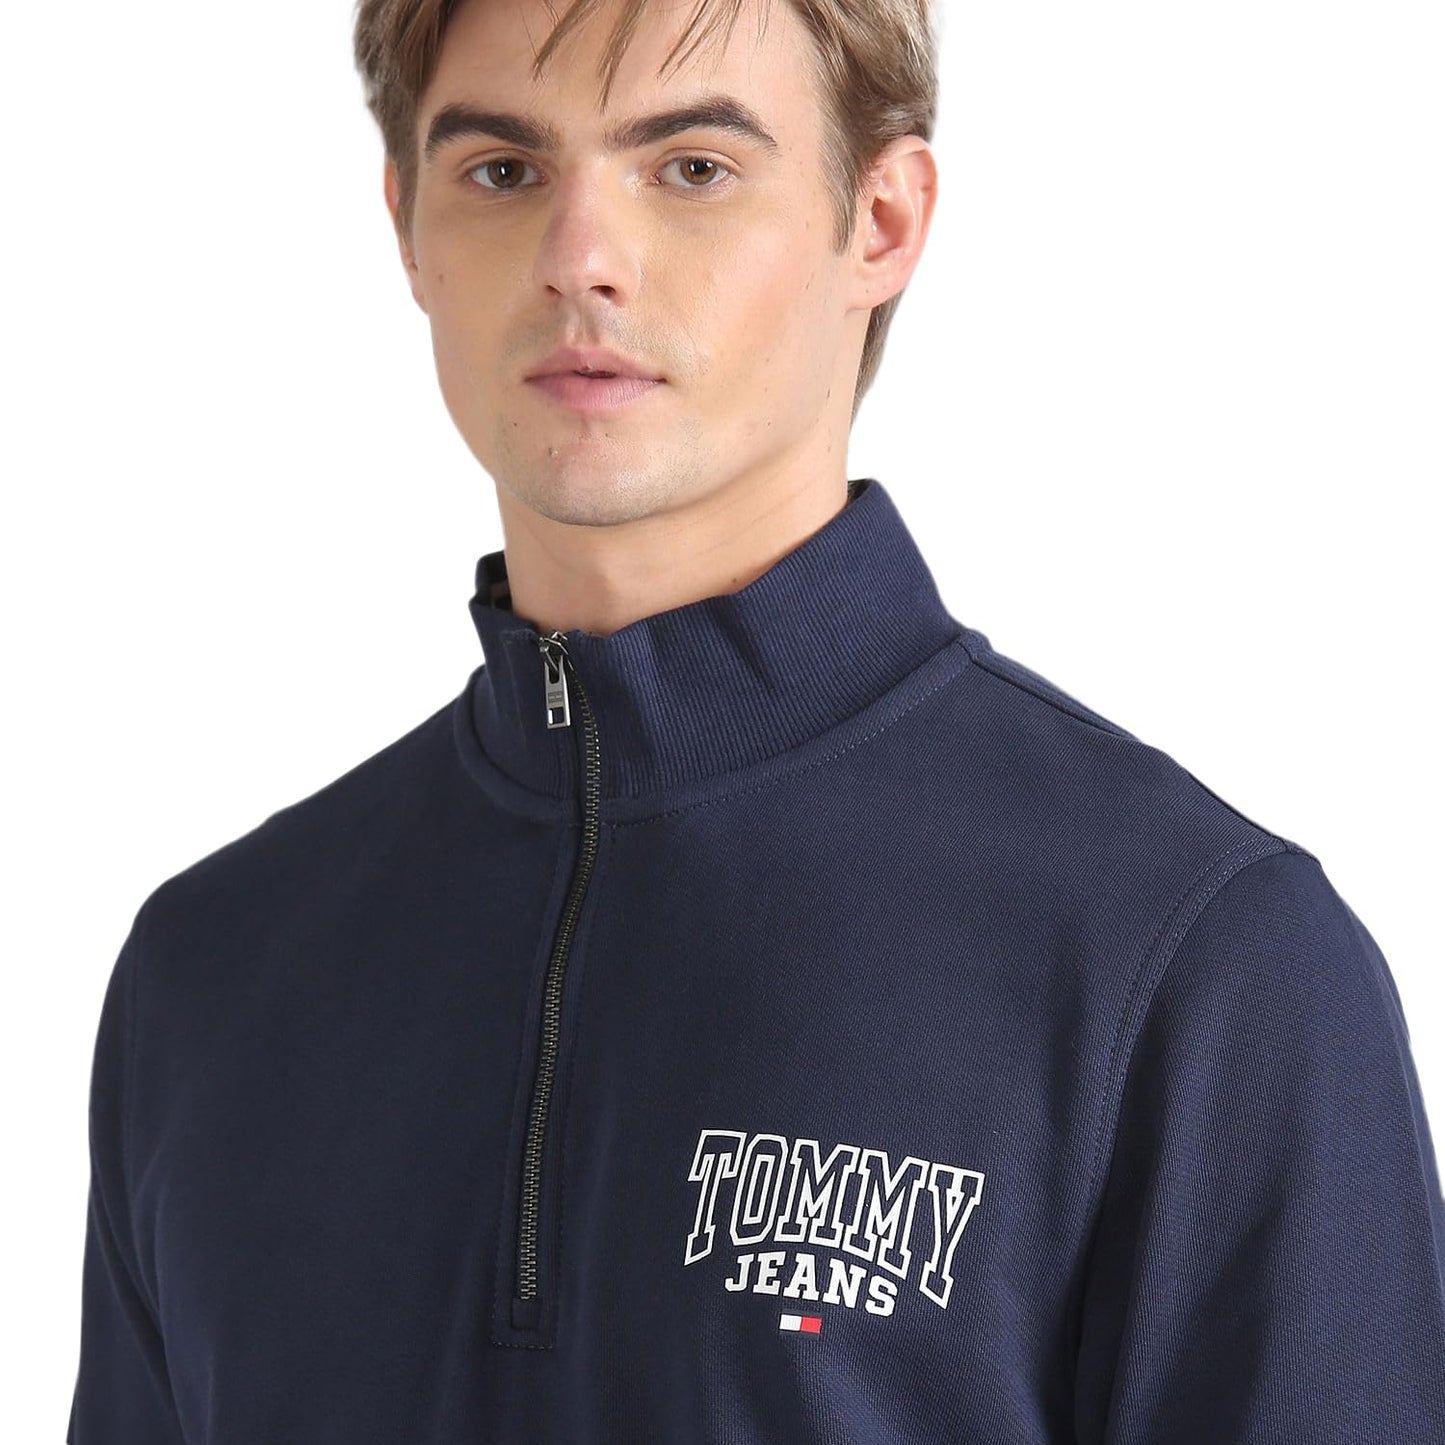 Tommy Hilfiger Men's Cotton Mock Neck Sweatshirt (F23JMHK021_Blue